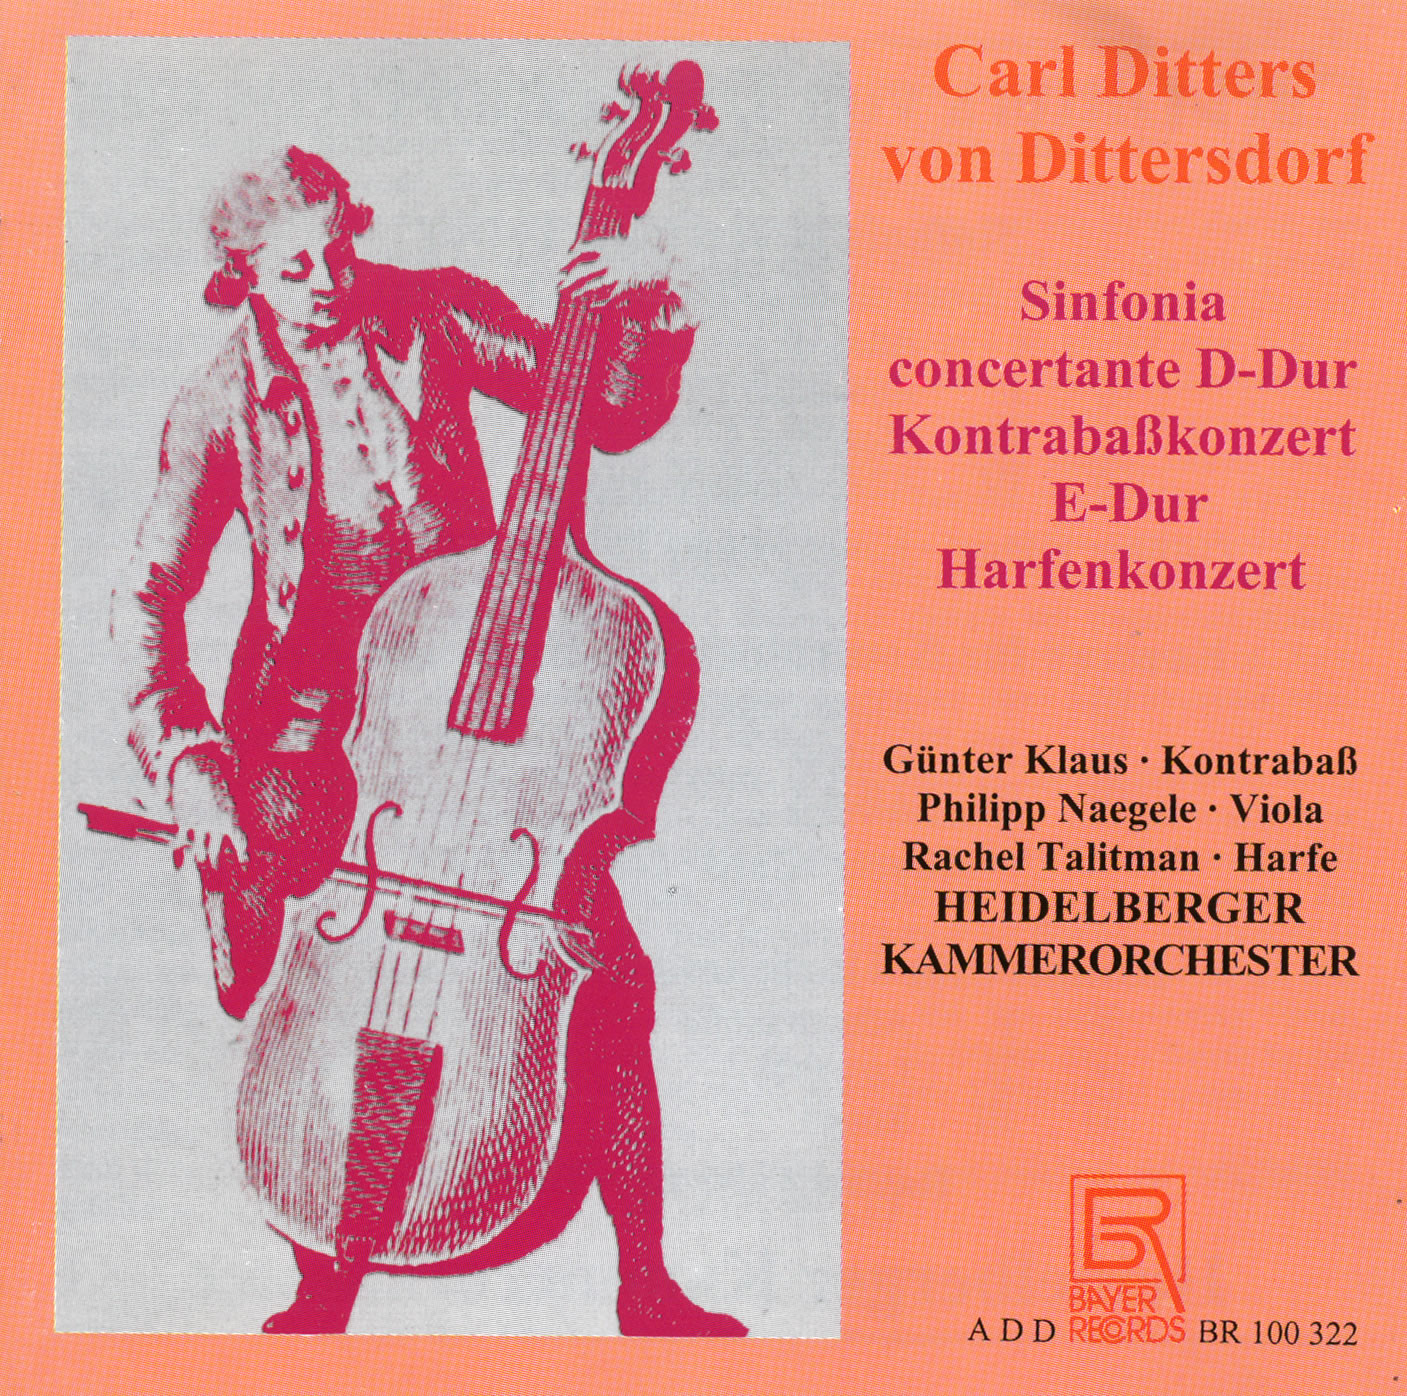 Carl Ditters von Dittersdorf - Kontrabassmusik